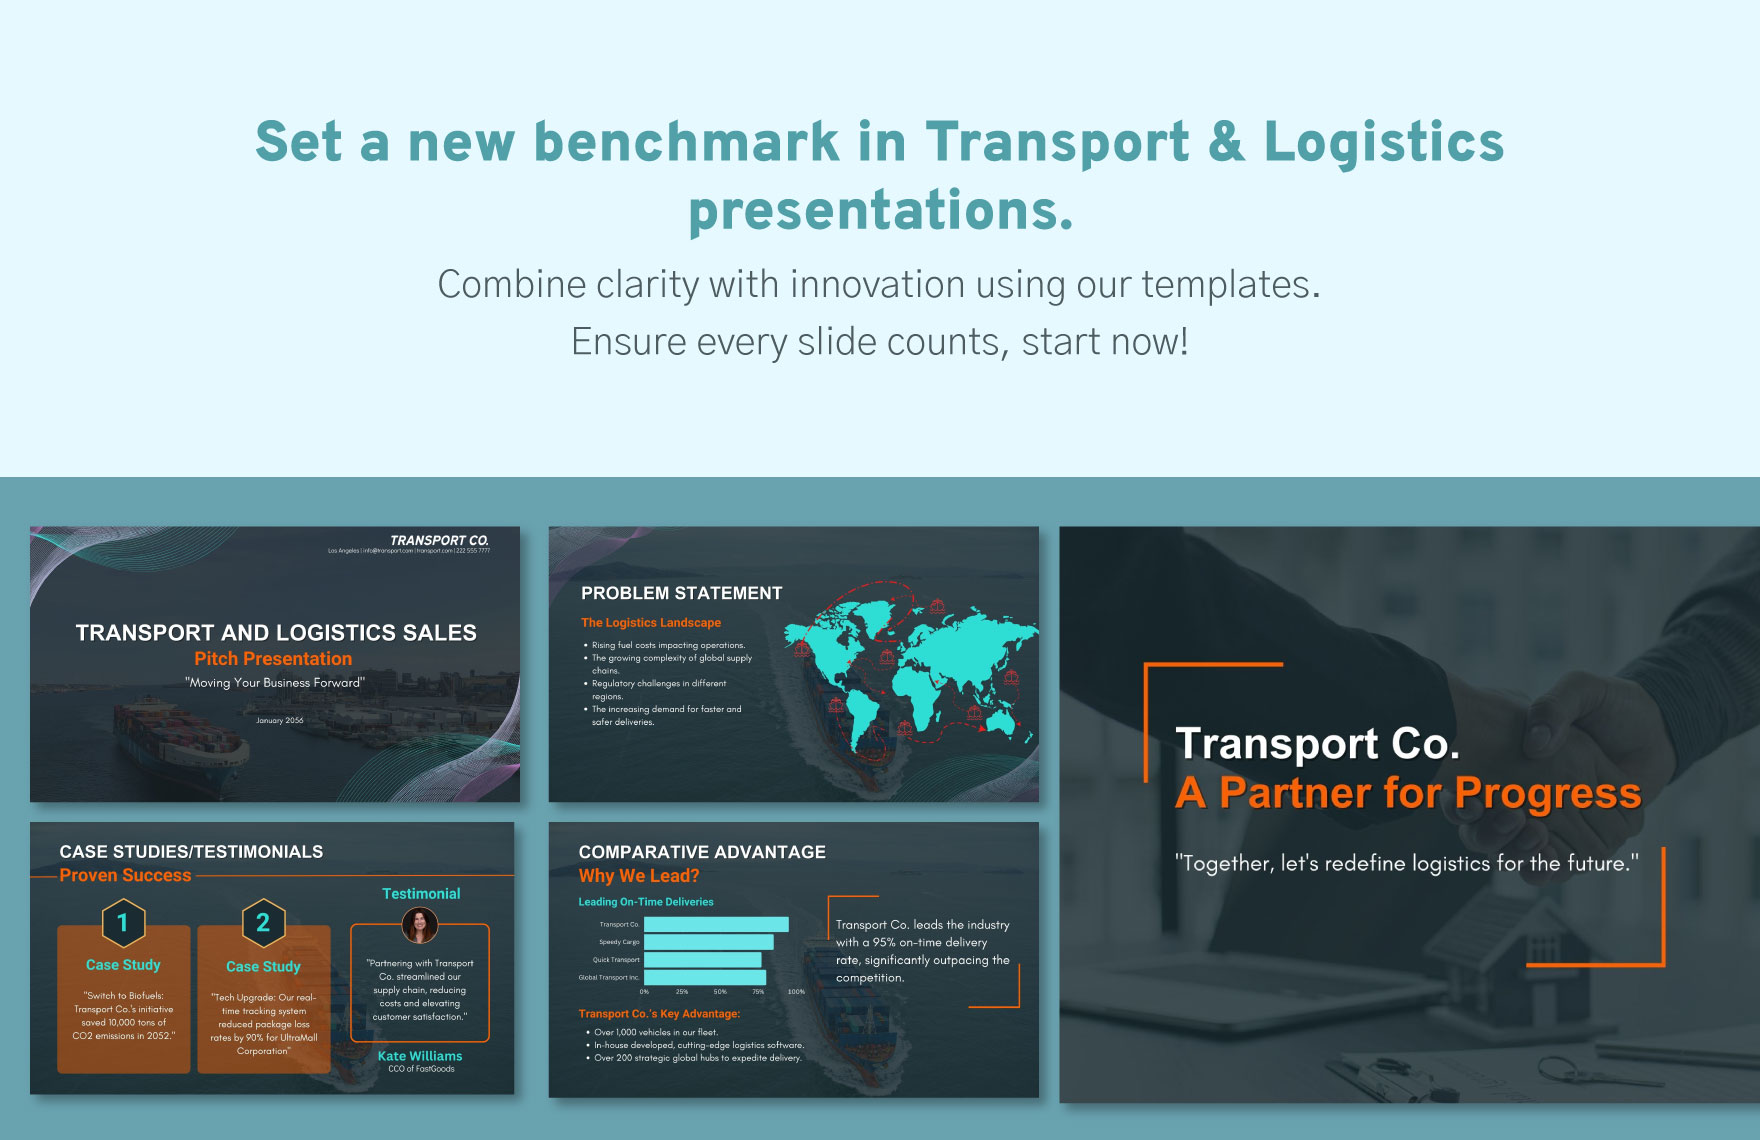 Transport and Logistics Sales Pitch Presentation Template